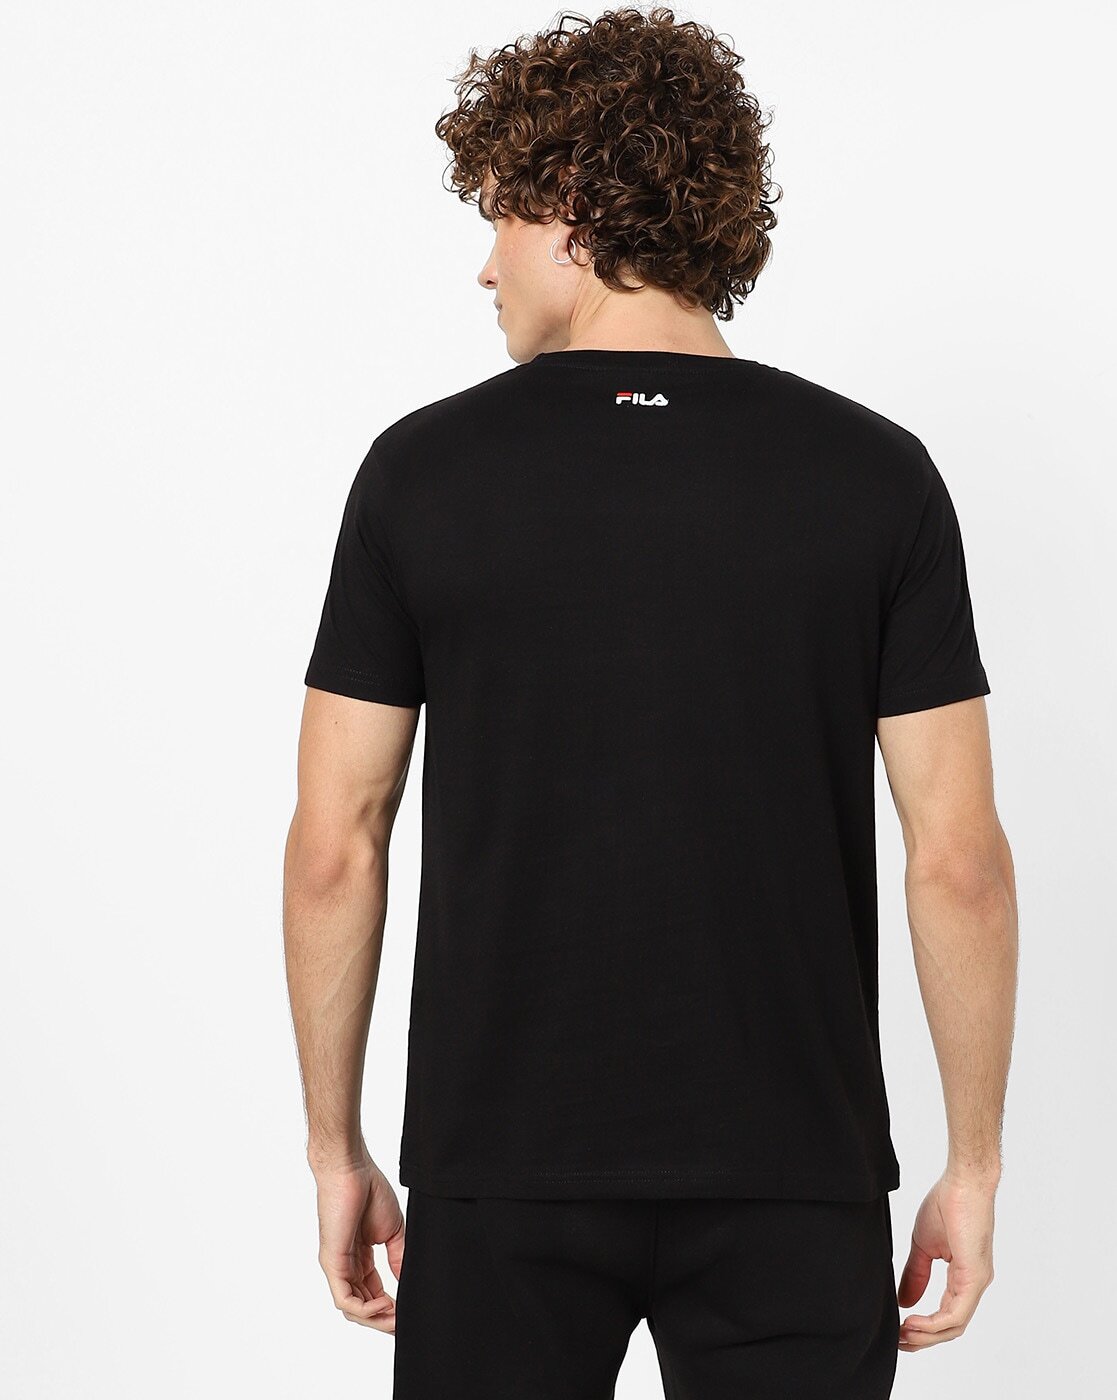 Falcon Logo Print Crew-Neck T-shirt-Falcon black